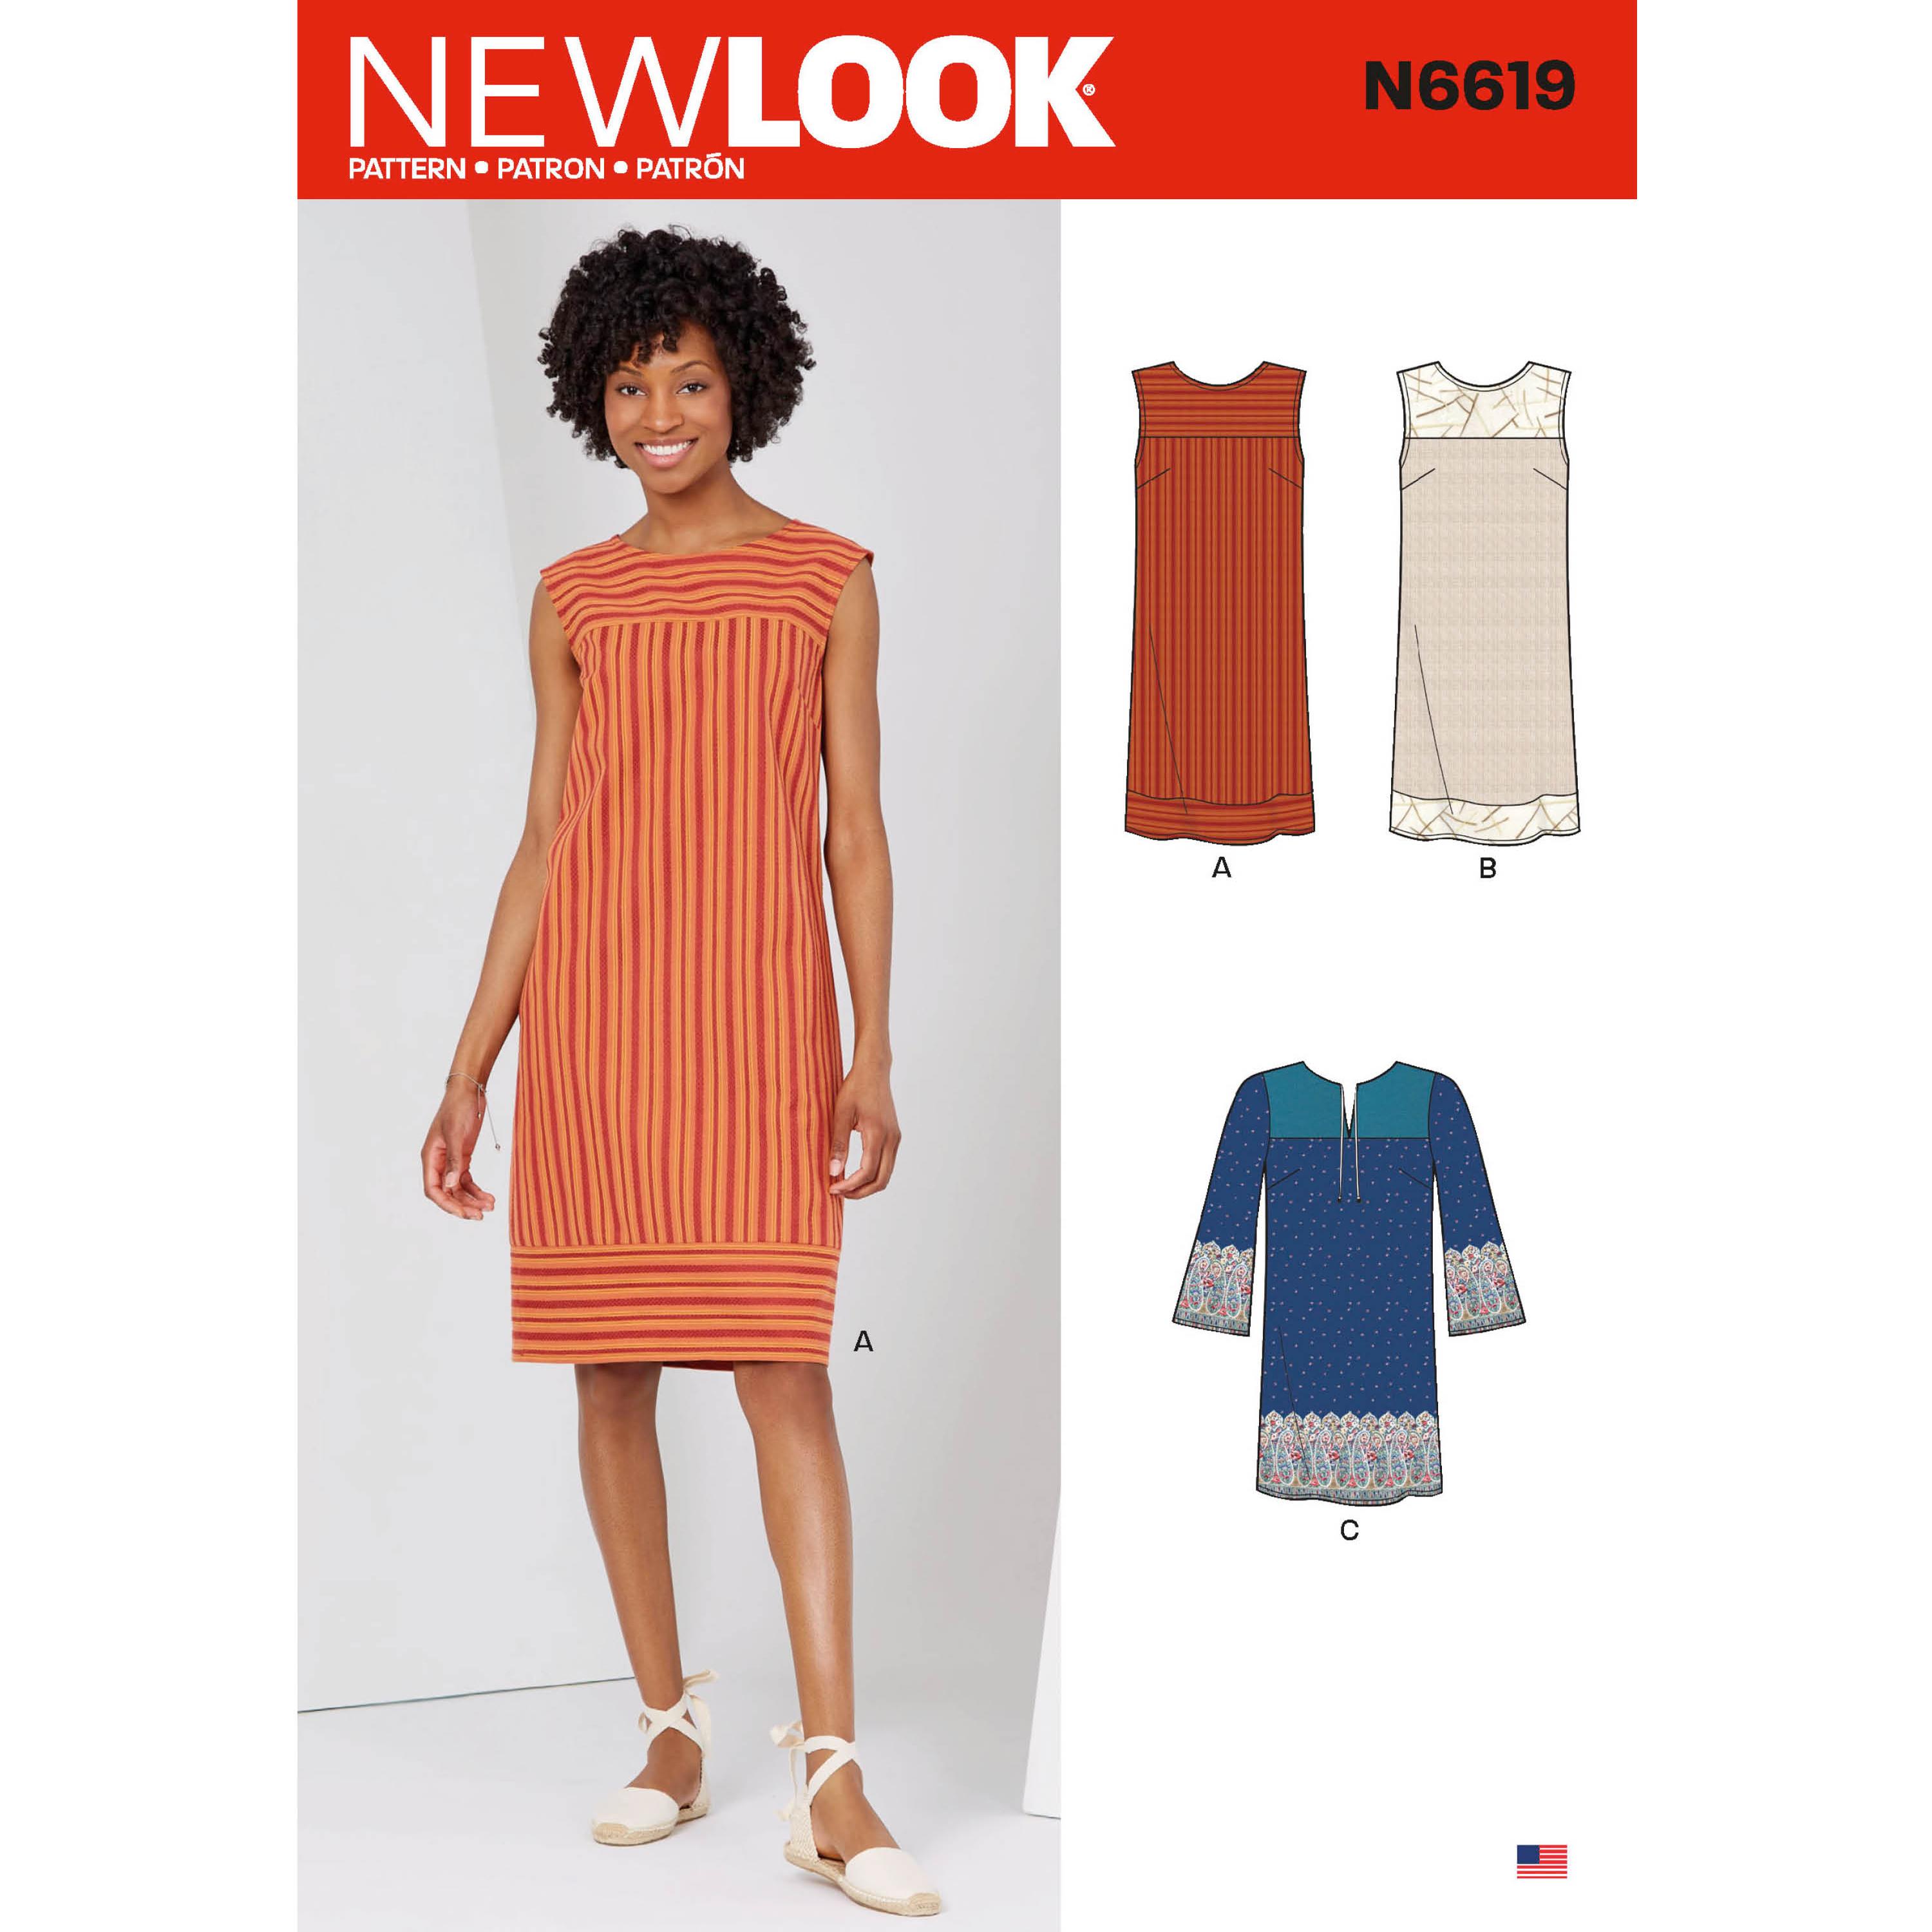 NewLook Sewing Pattern N6619 Misses' Dresses